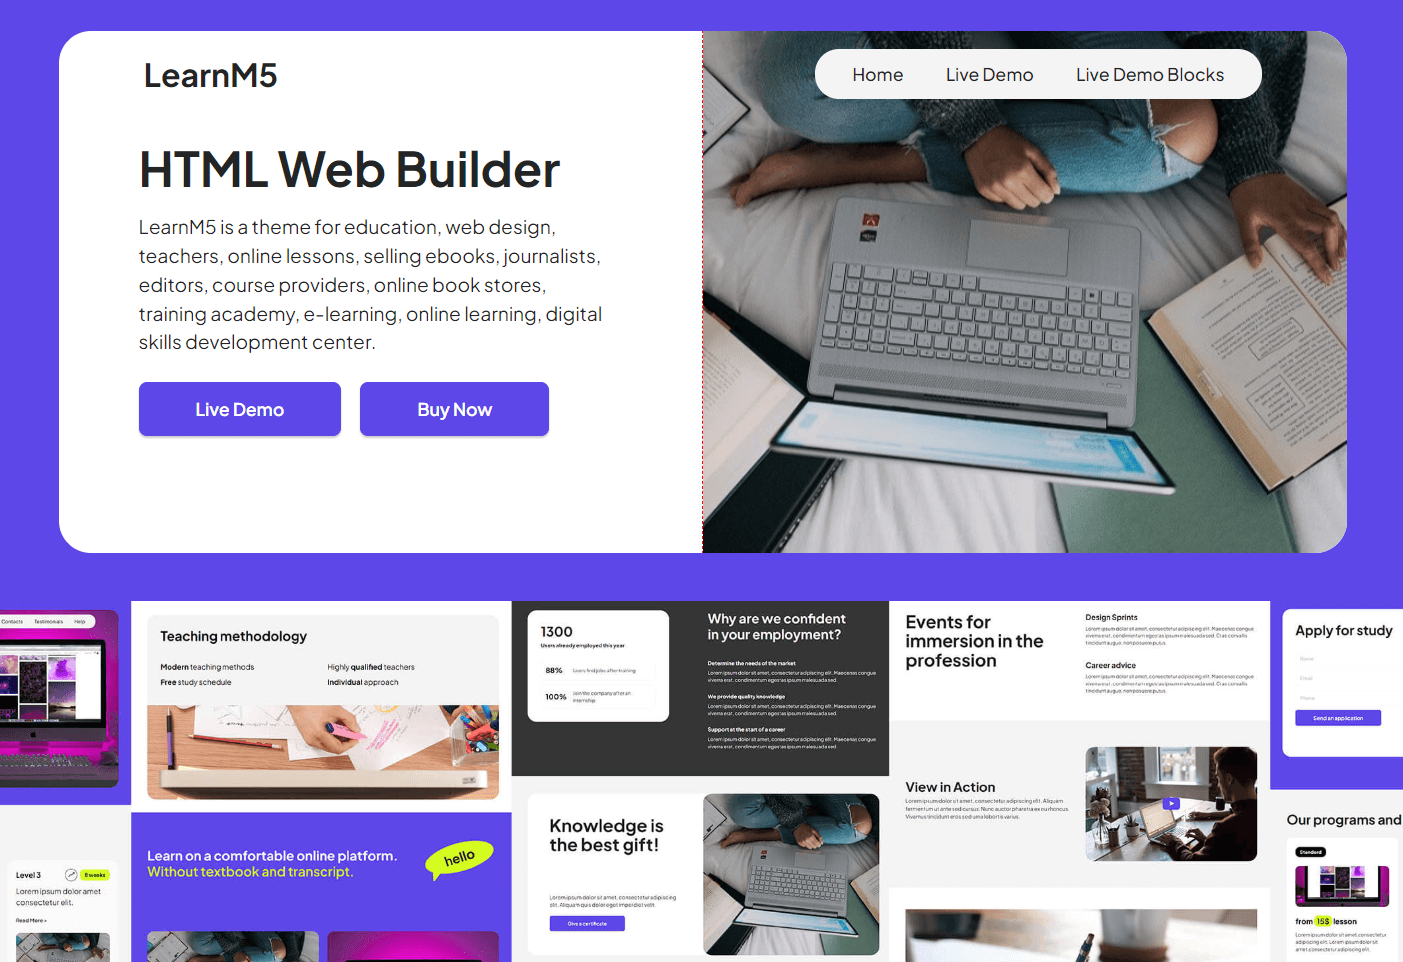  HTML Website Maker